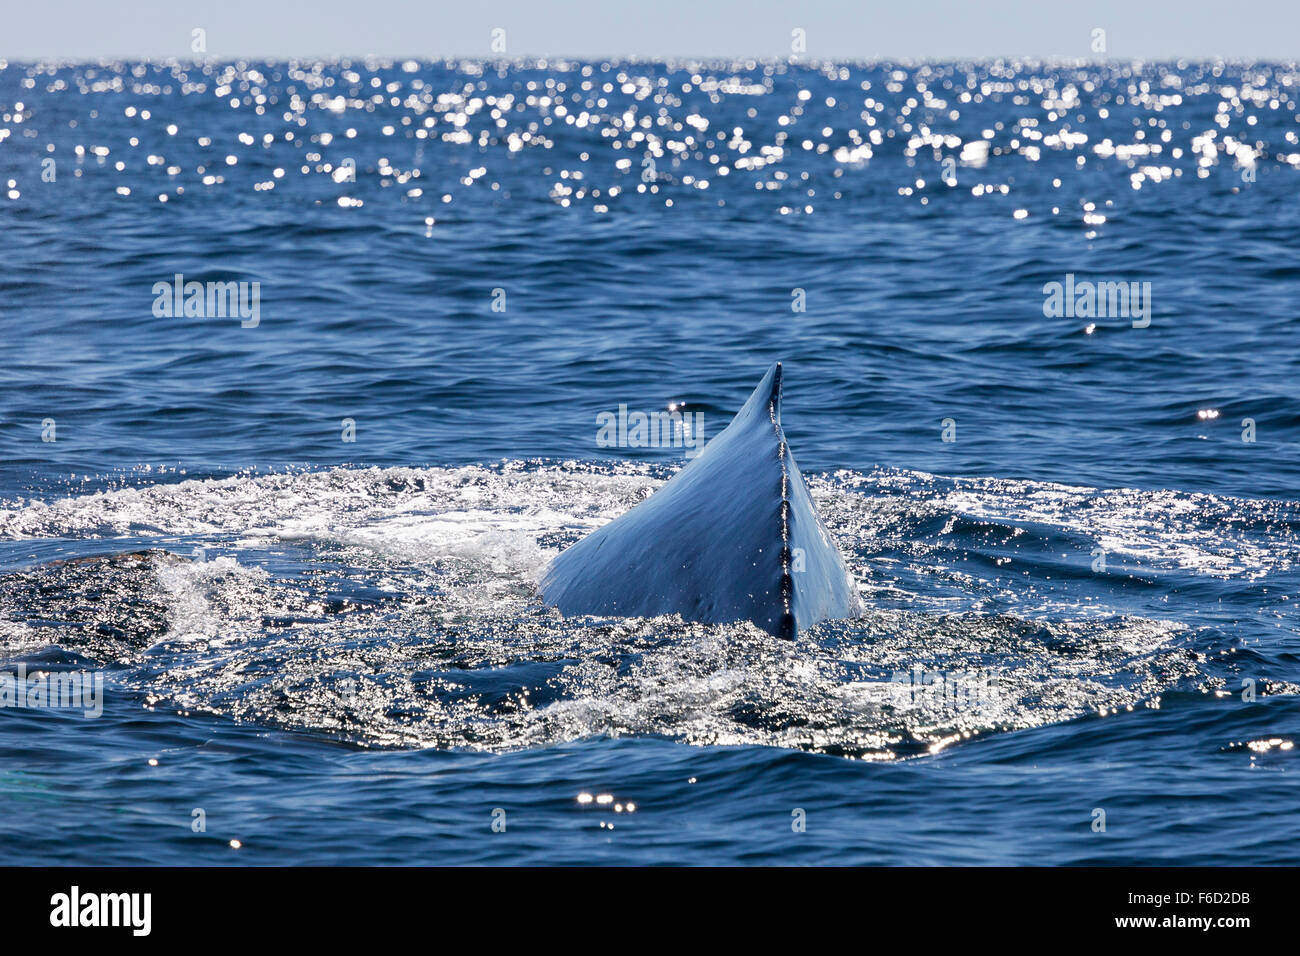 The back of a massive humpback whale breaks the water near Mazatlan, Sinaloa, Mexico. Stock Photo